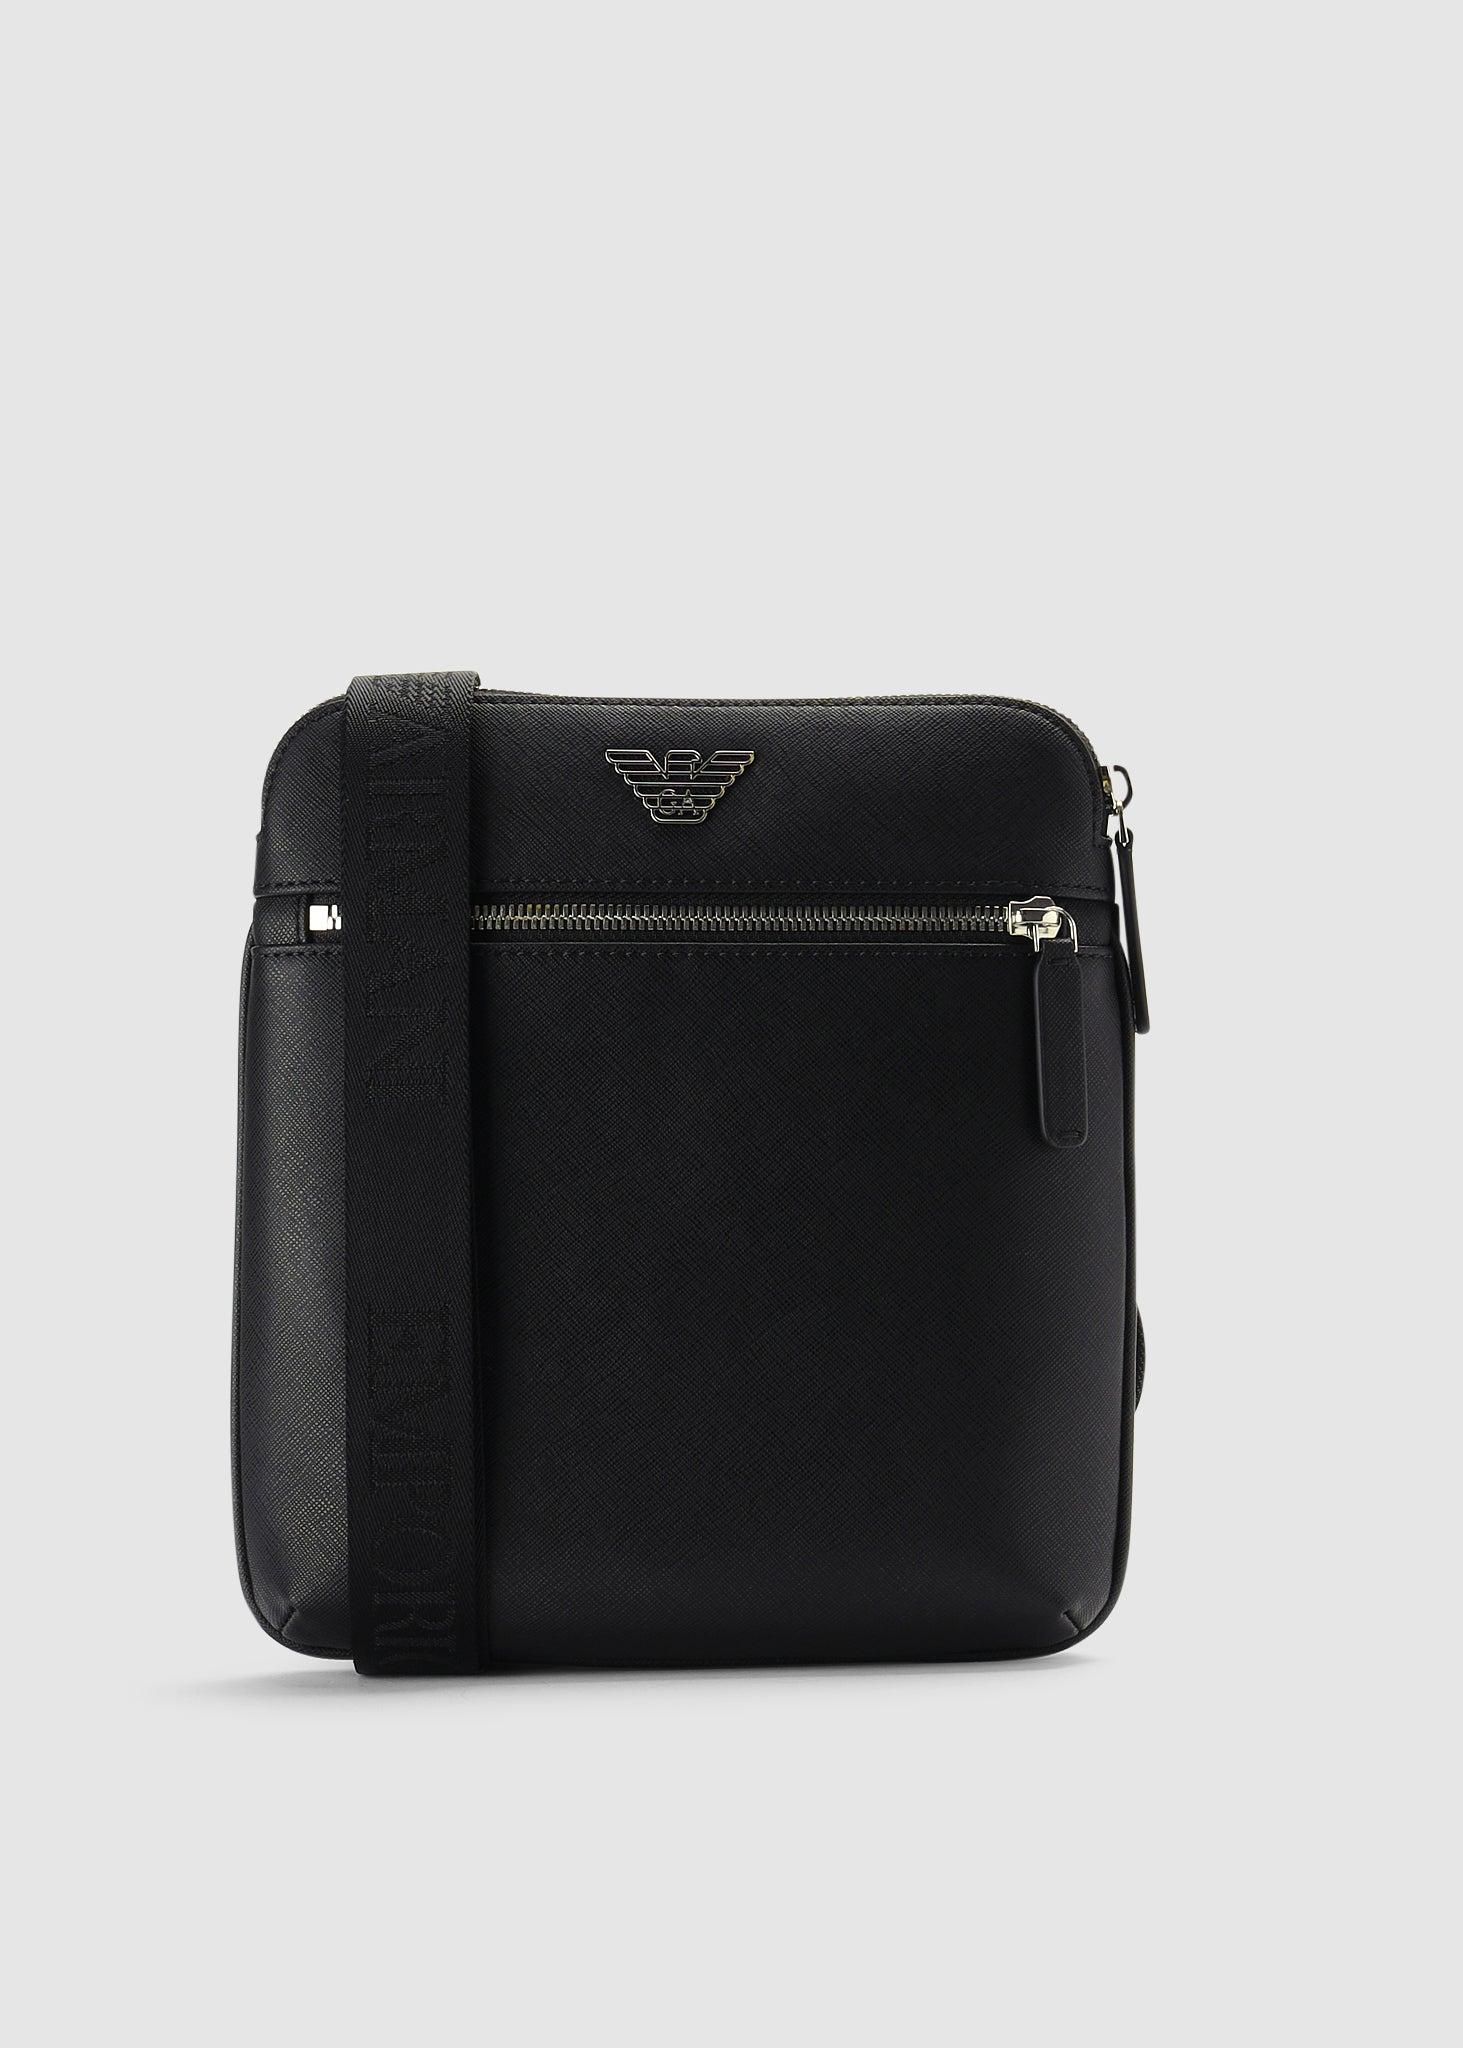 Emporio Armani Leather Crossbody Bag in Black for Men | Lyst